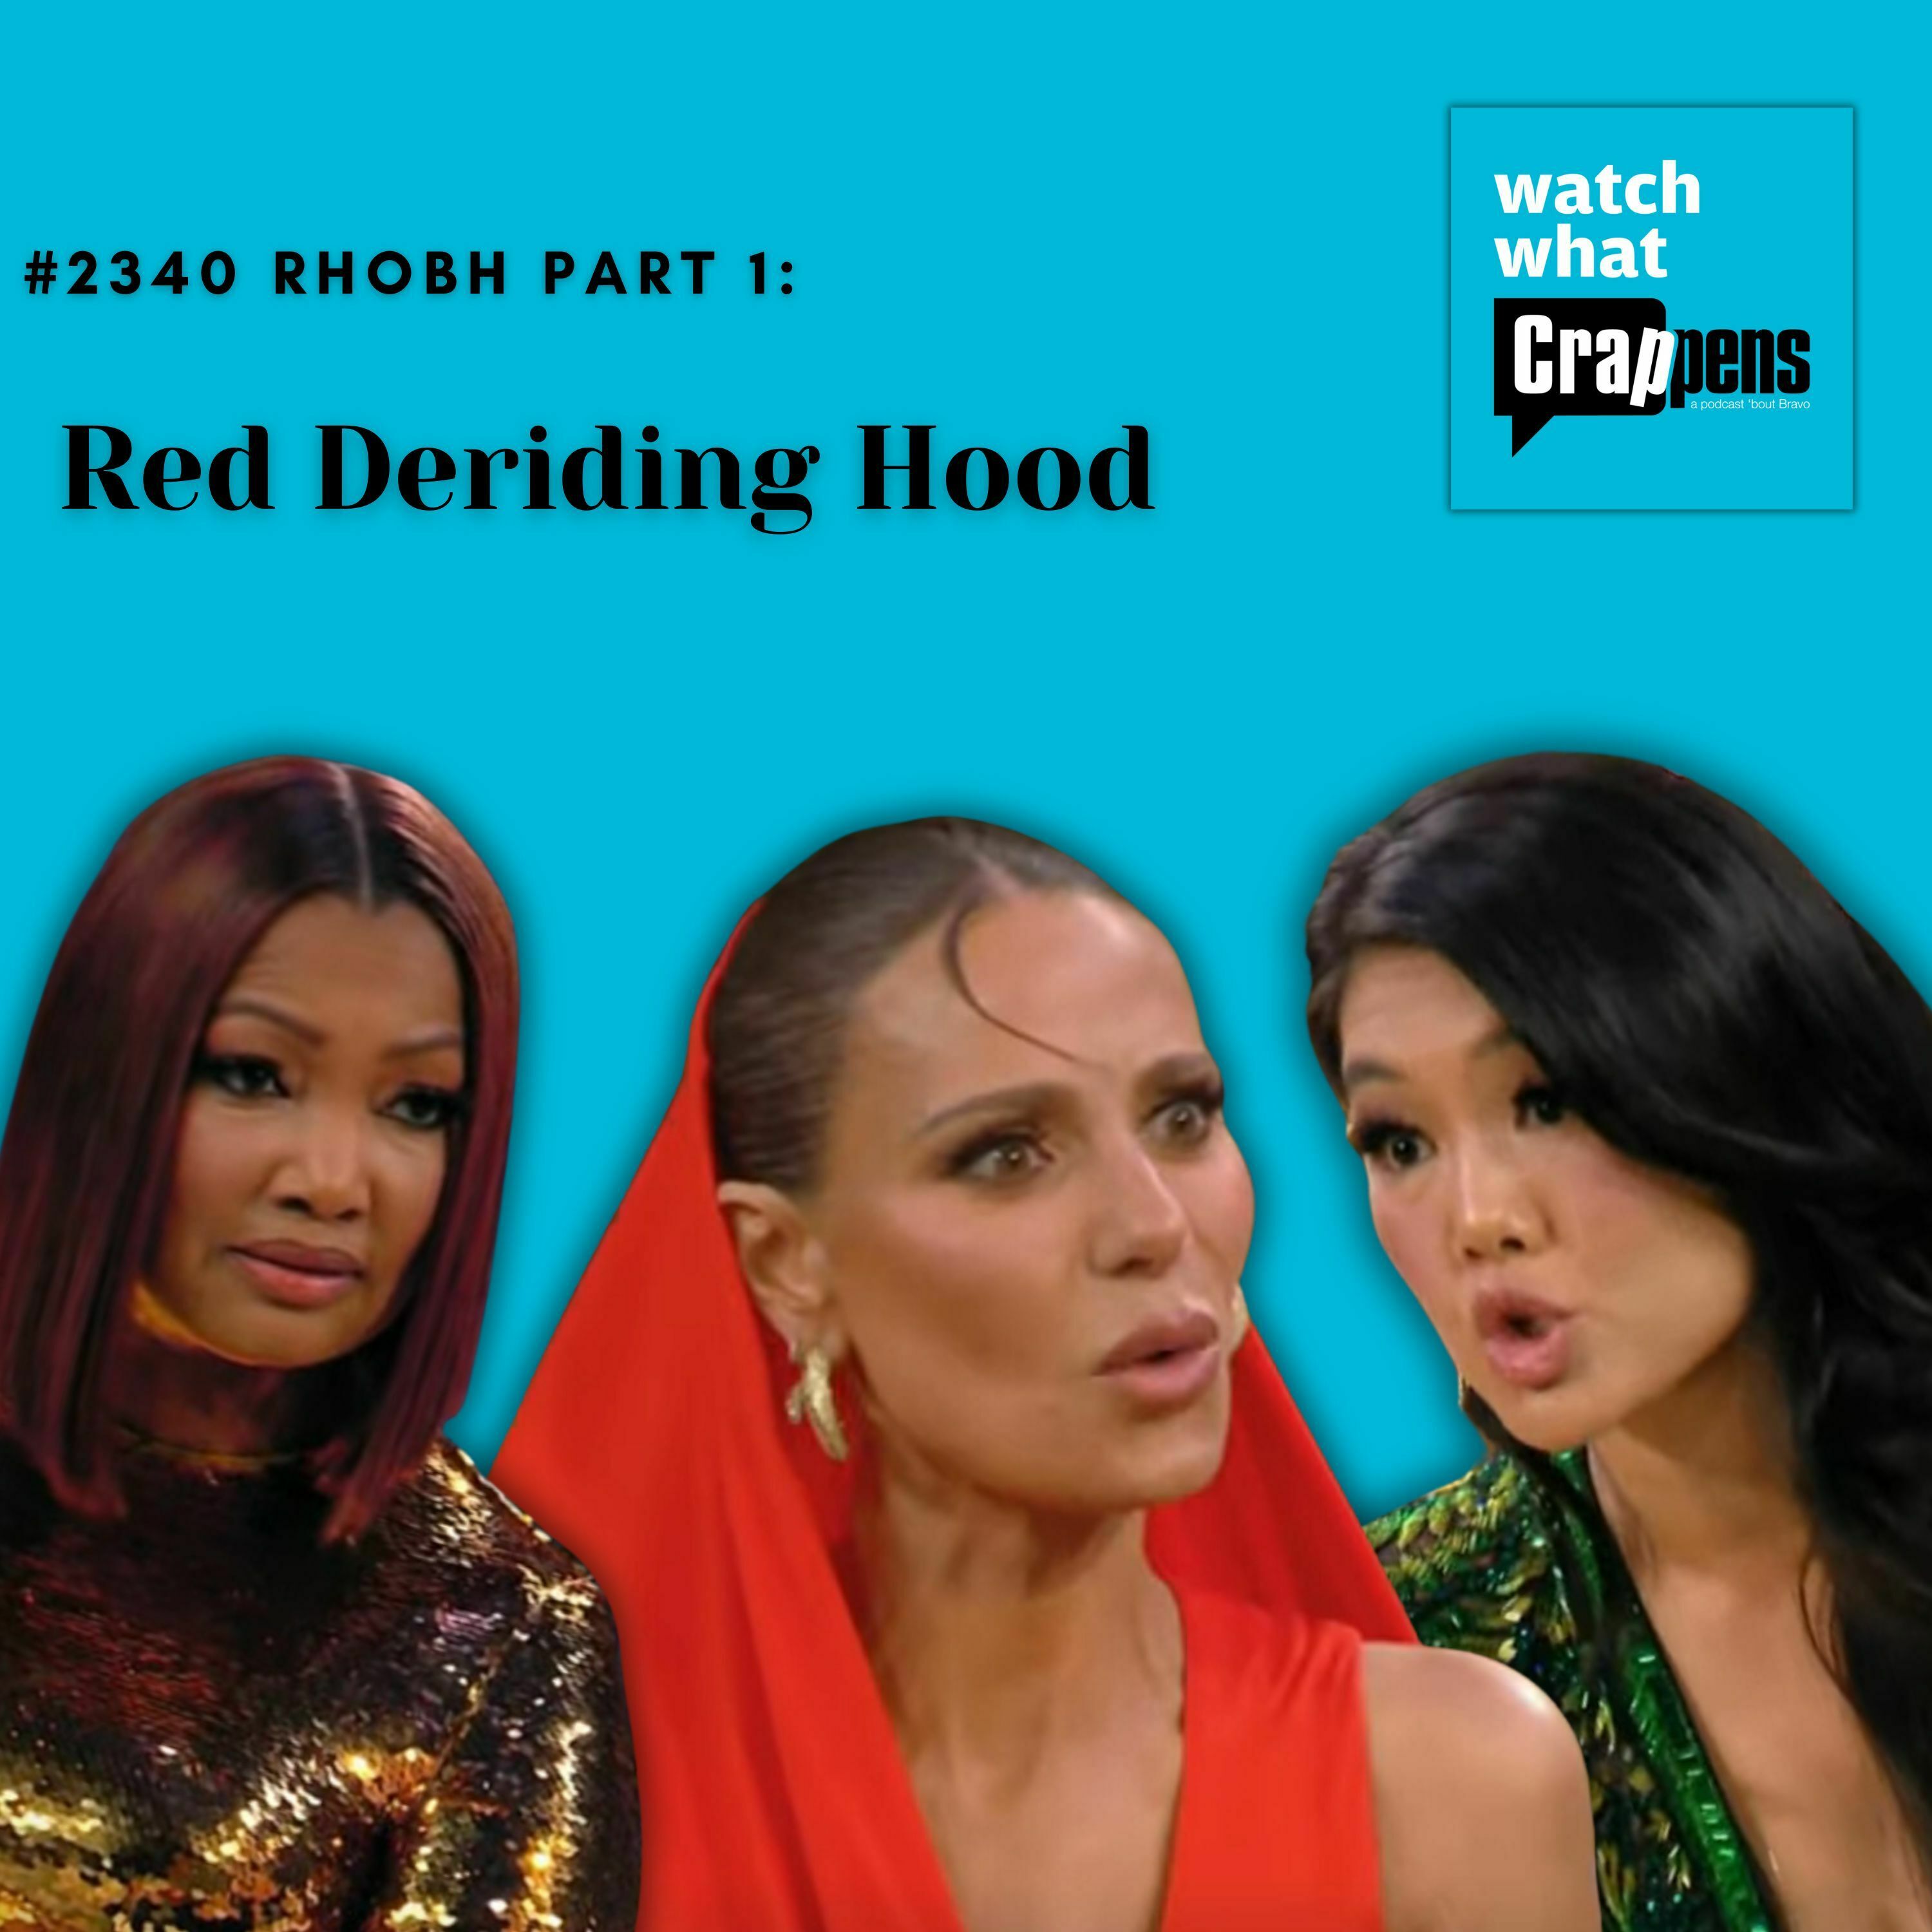 #2340 RHOBH Part 1: Red Deriding Hood